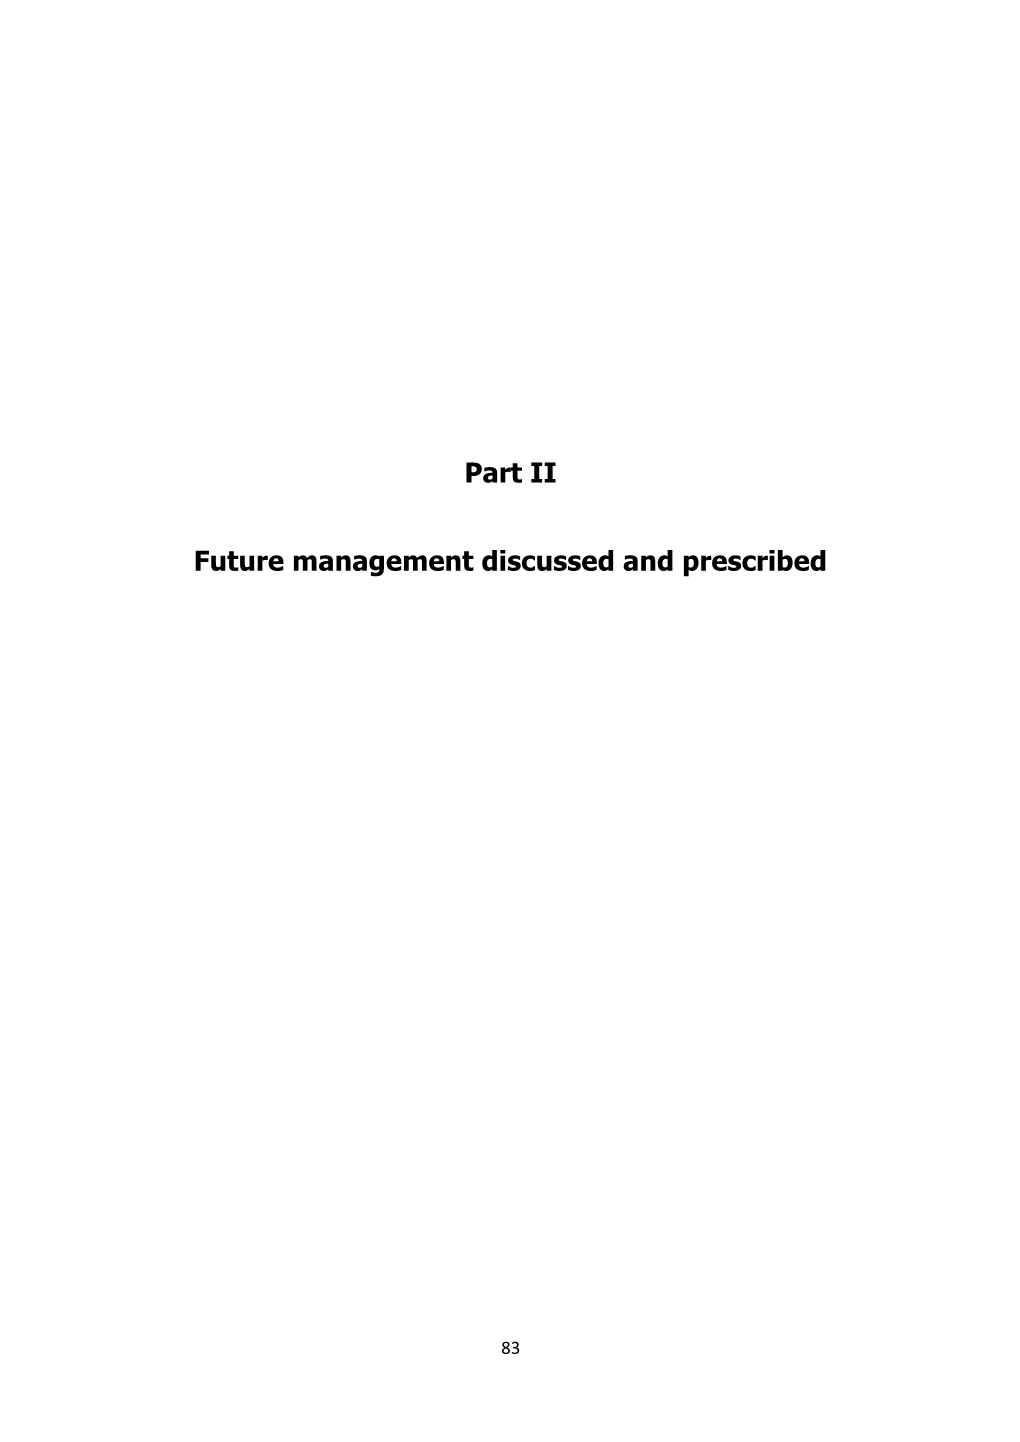 Part II Future Management Discussed and Prescribed